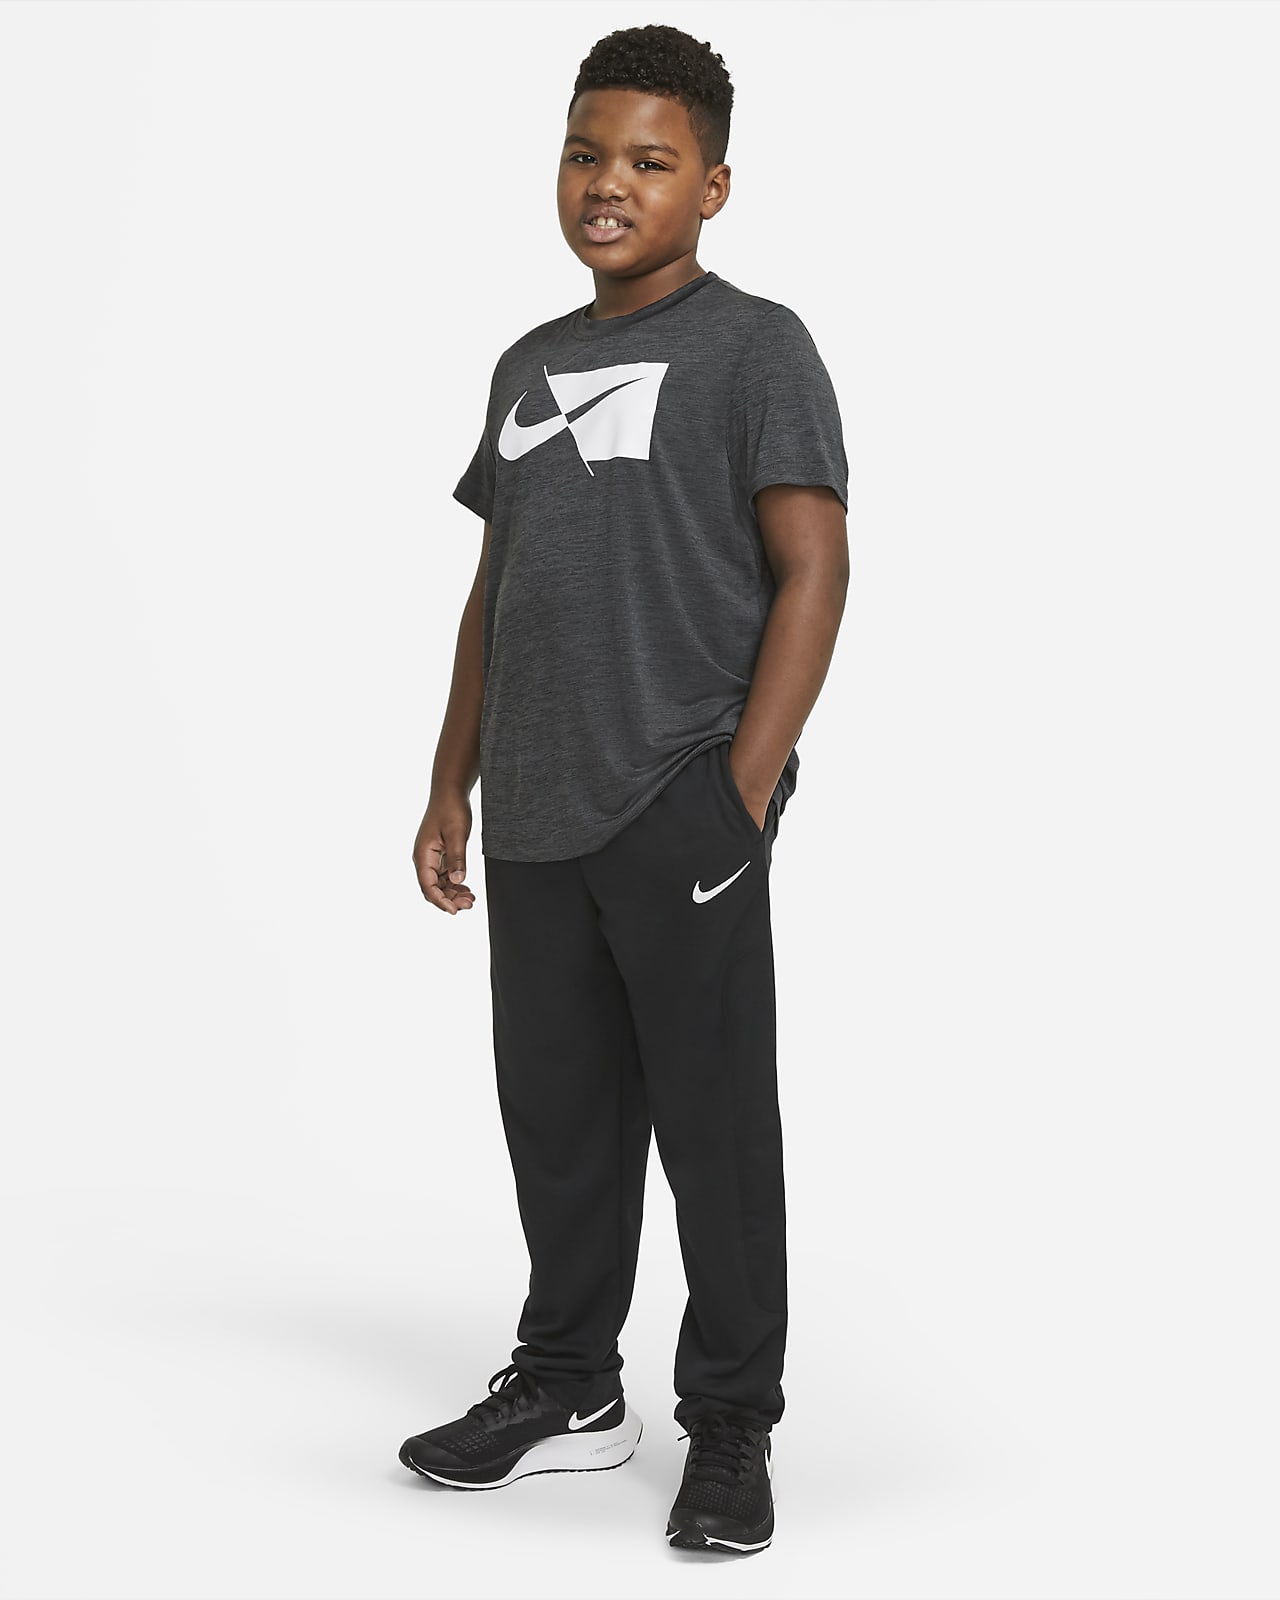 Nike Youth Boys Dri Fit Training Pants Size Med | eBay